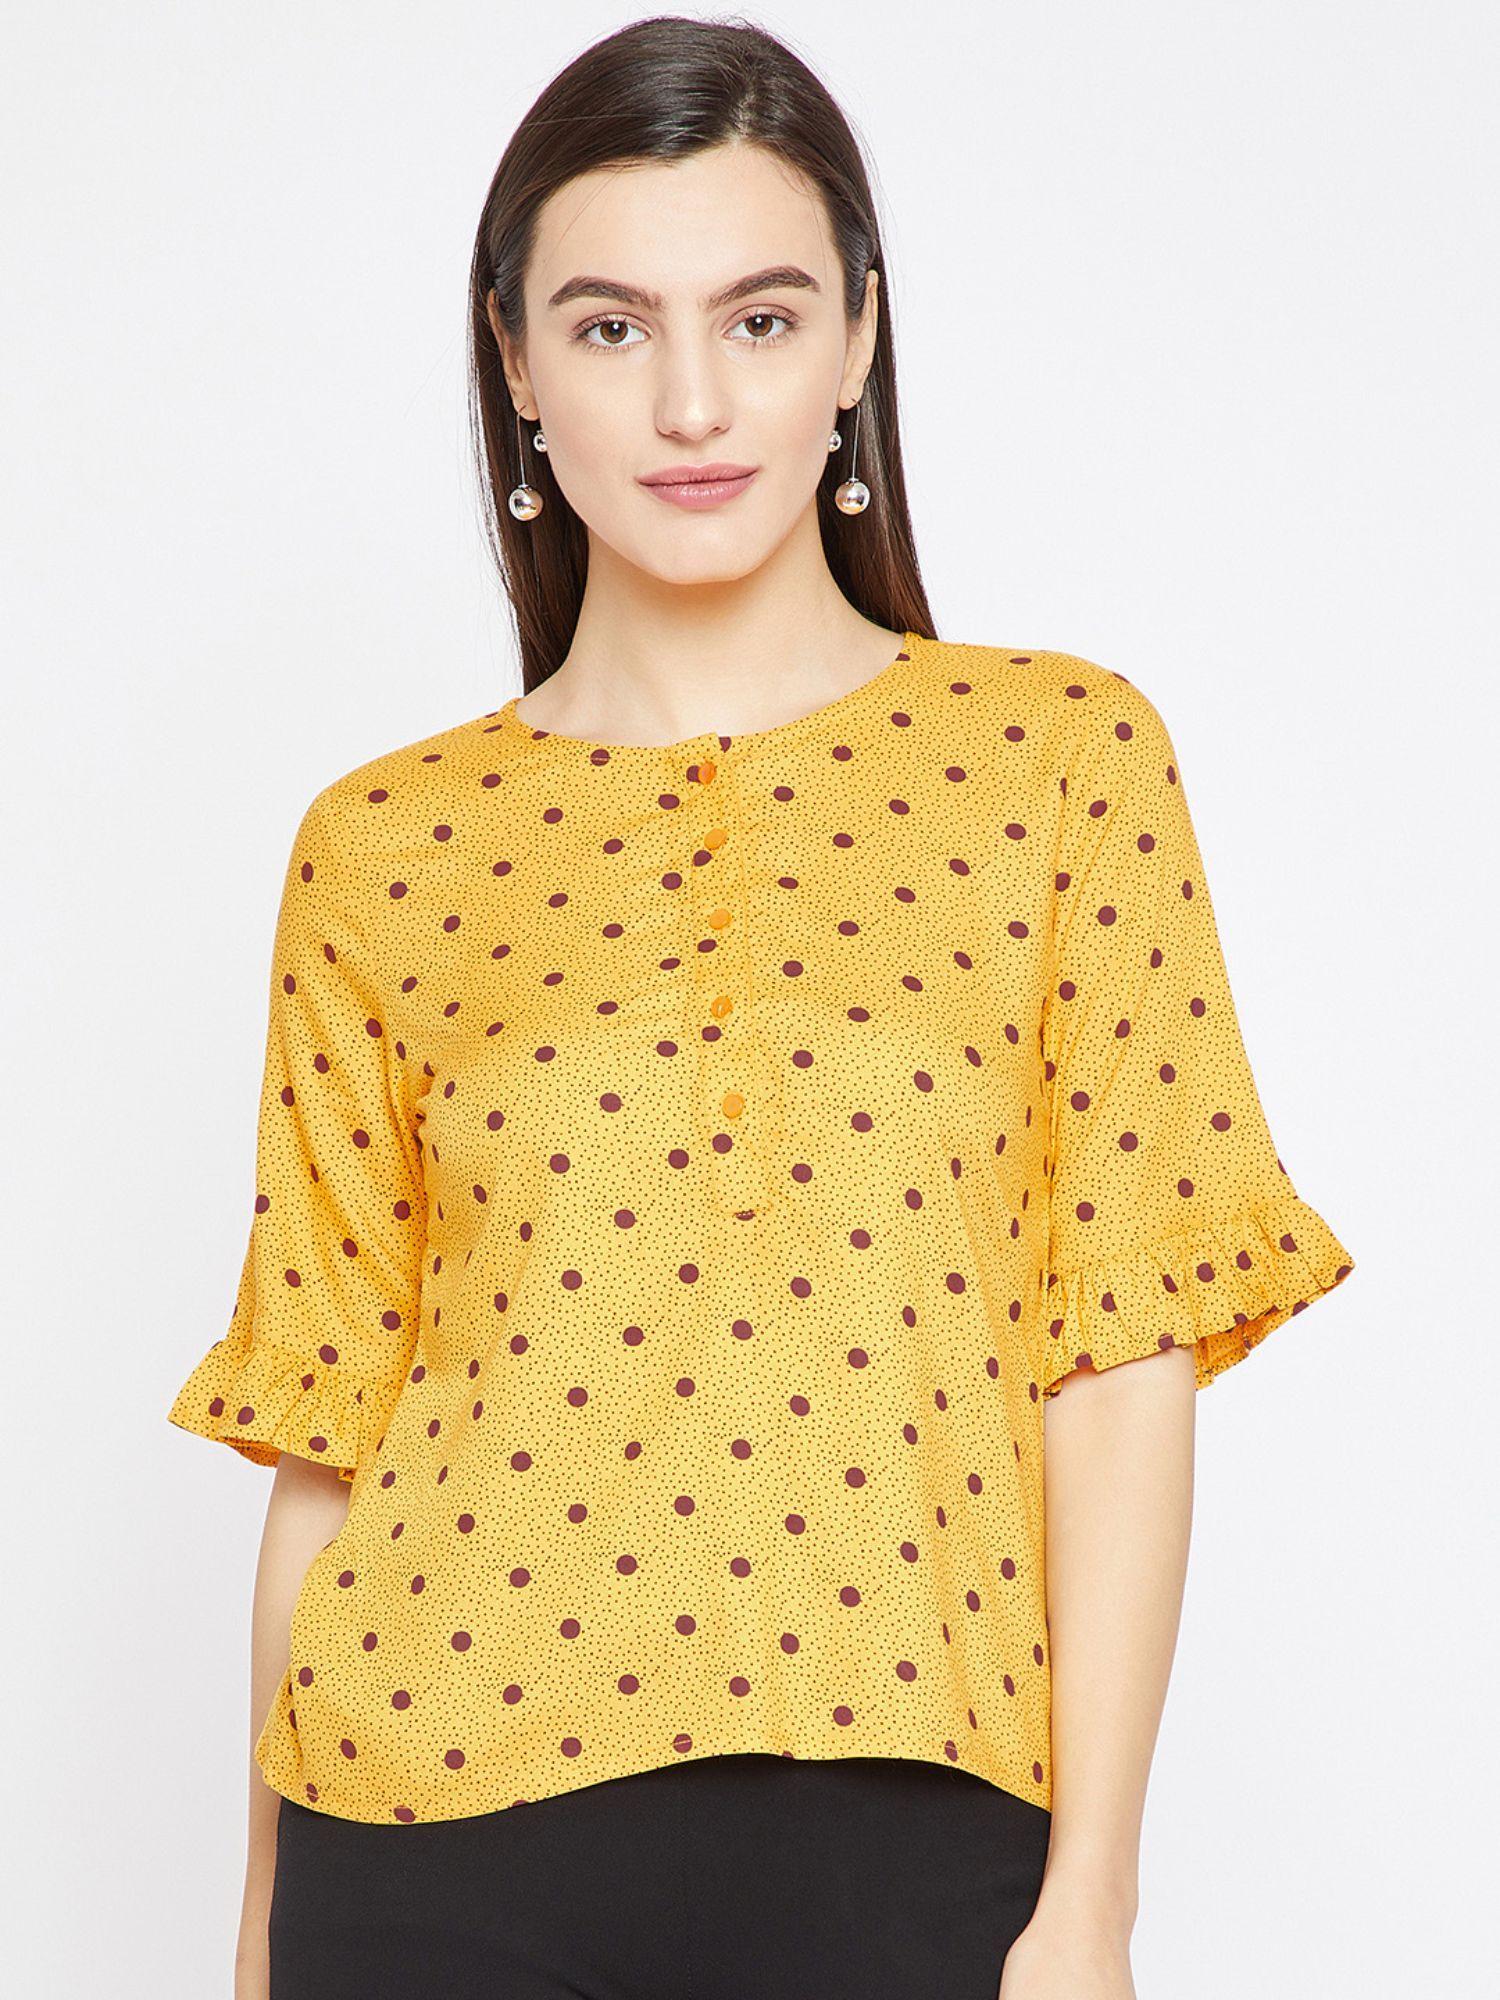 women yellow round neck polka dots top